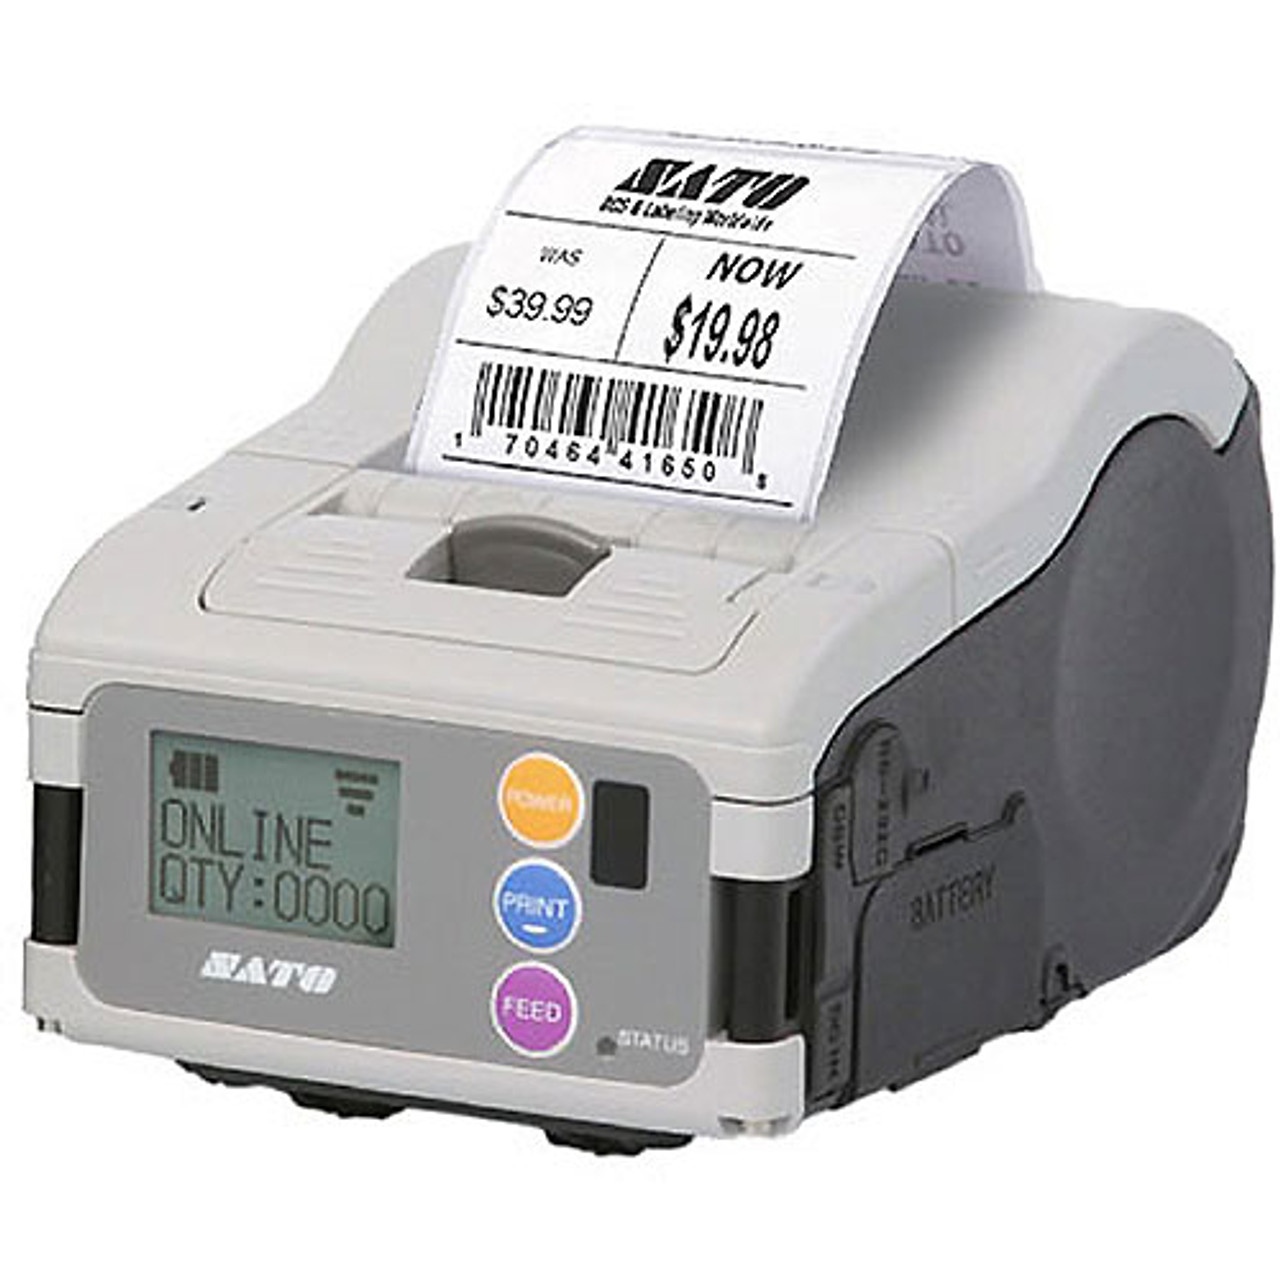 Sato MB200i Portable Label Printer